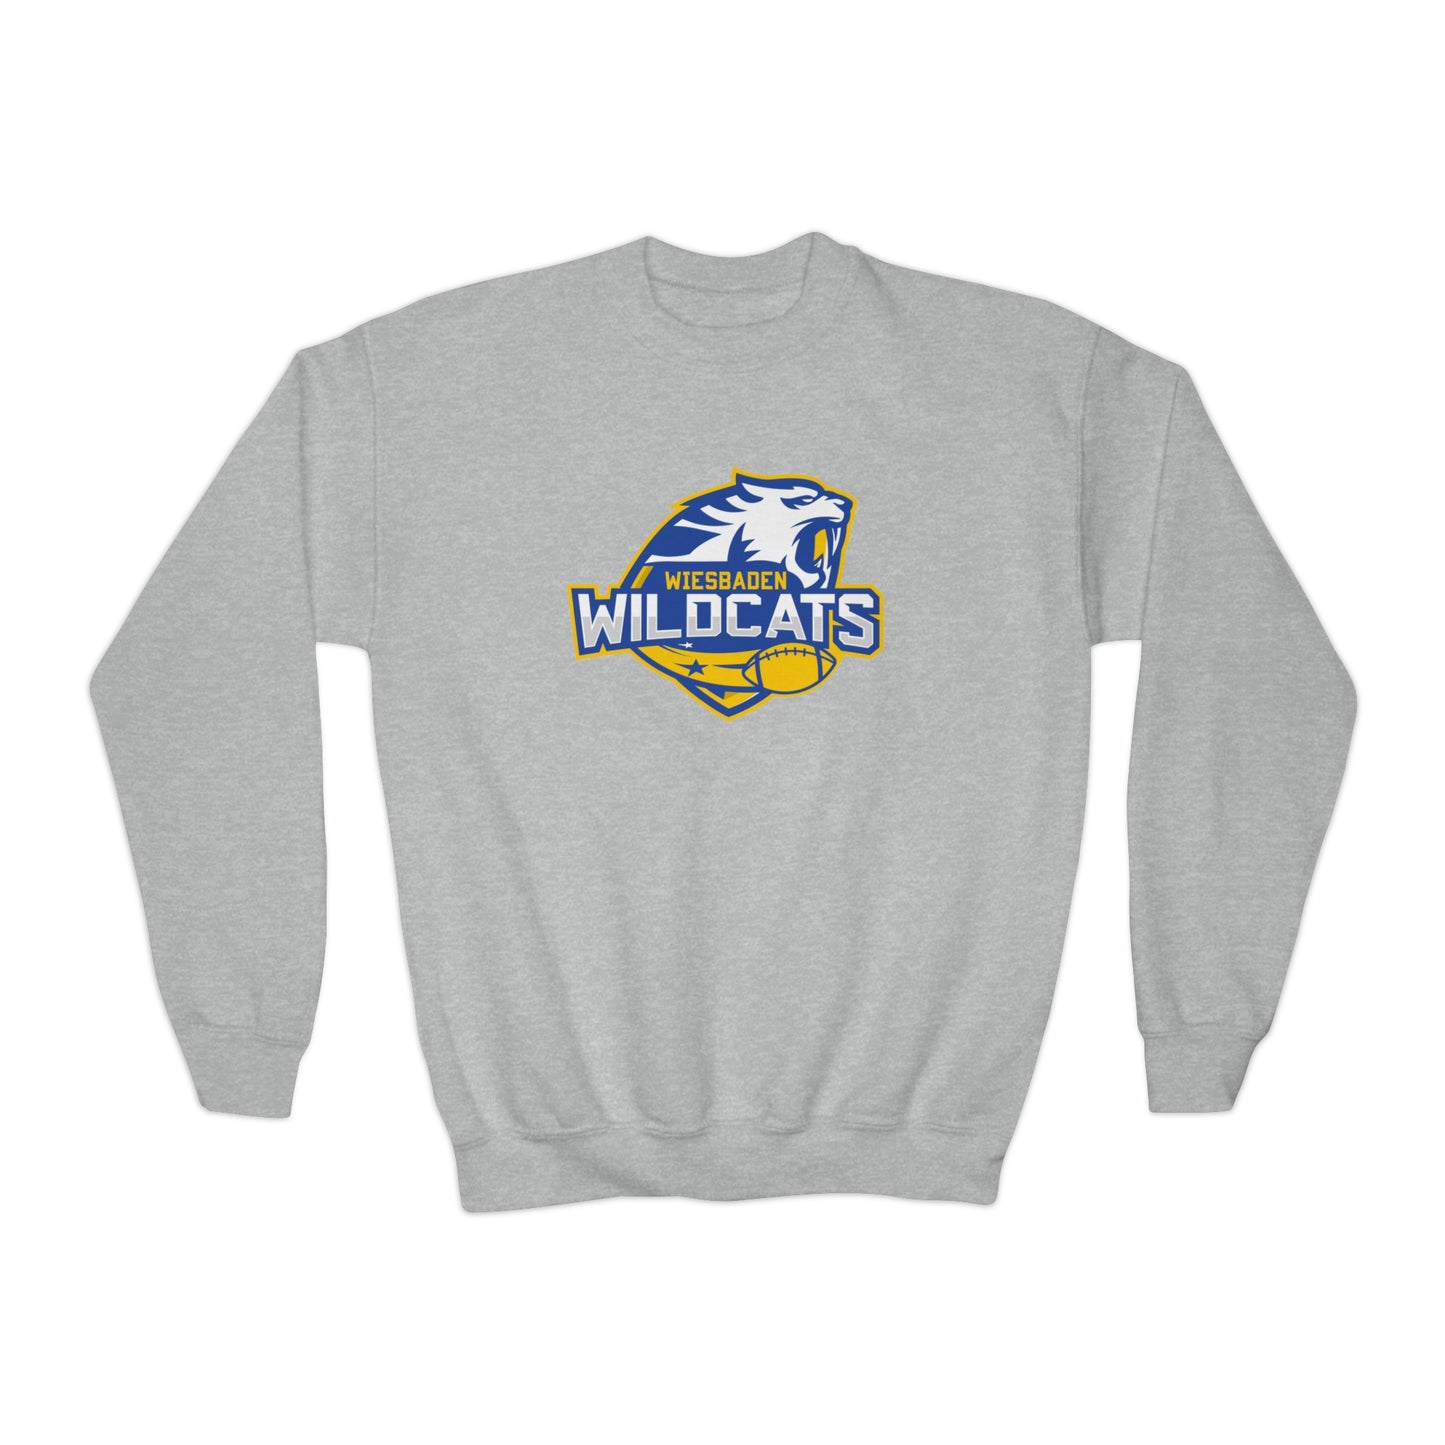 Wildcats - Youth Crewneck Sweatshirt